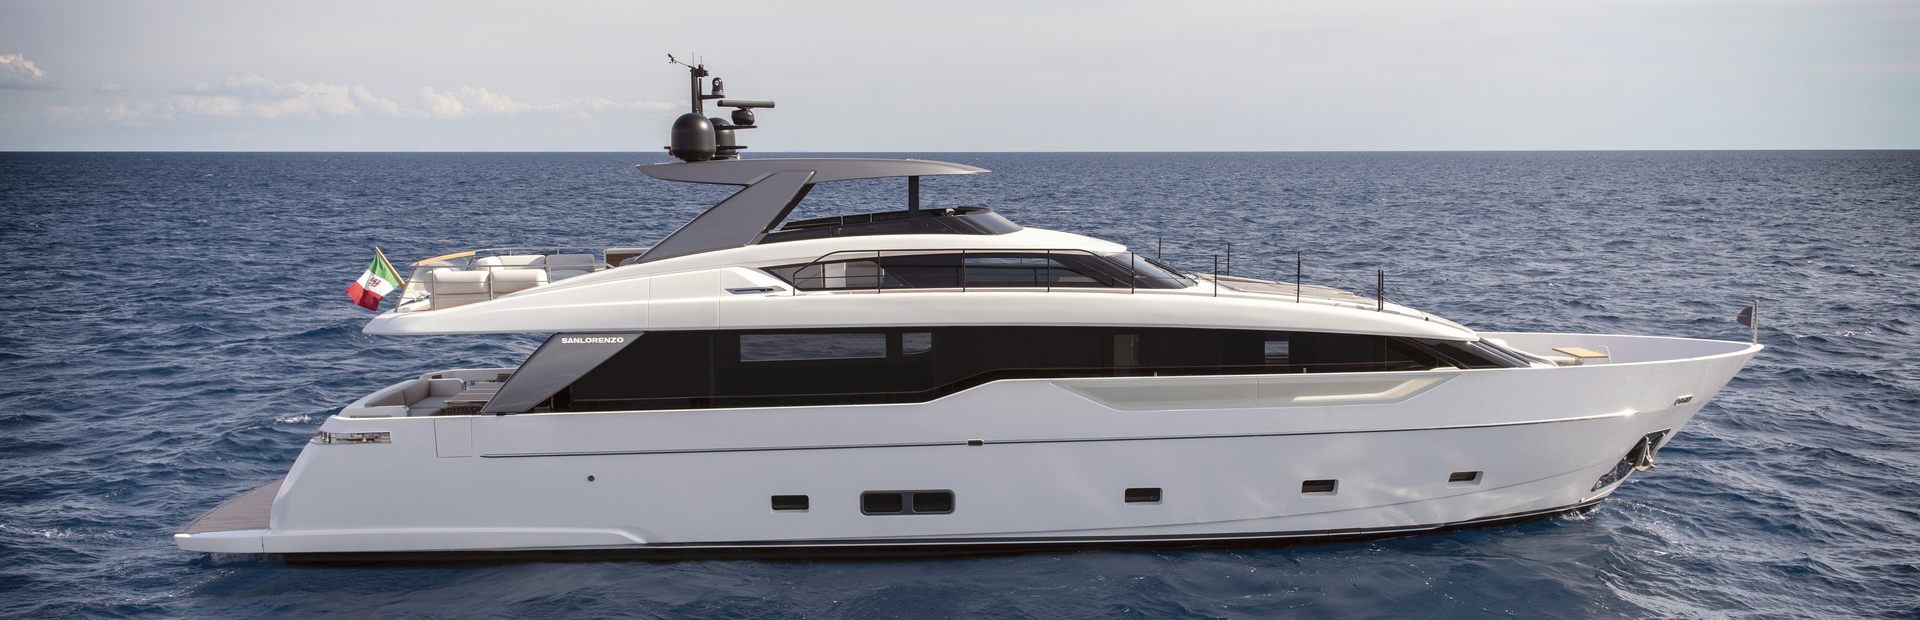 SL90 Asymmetric Yacht